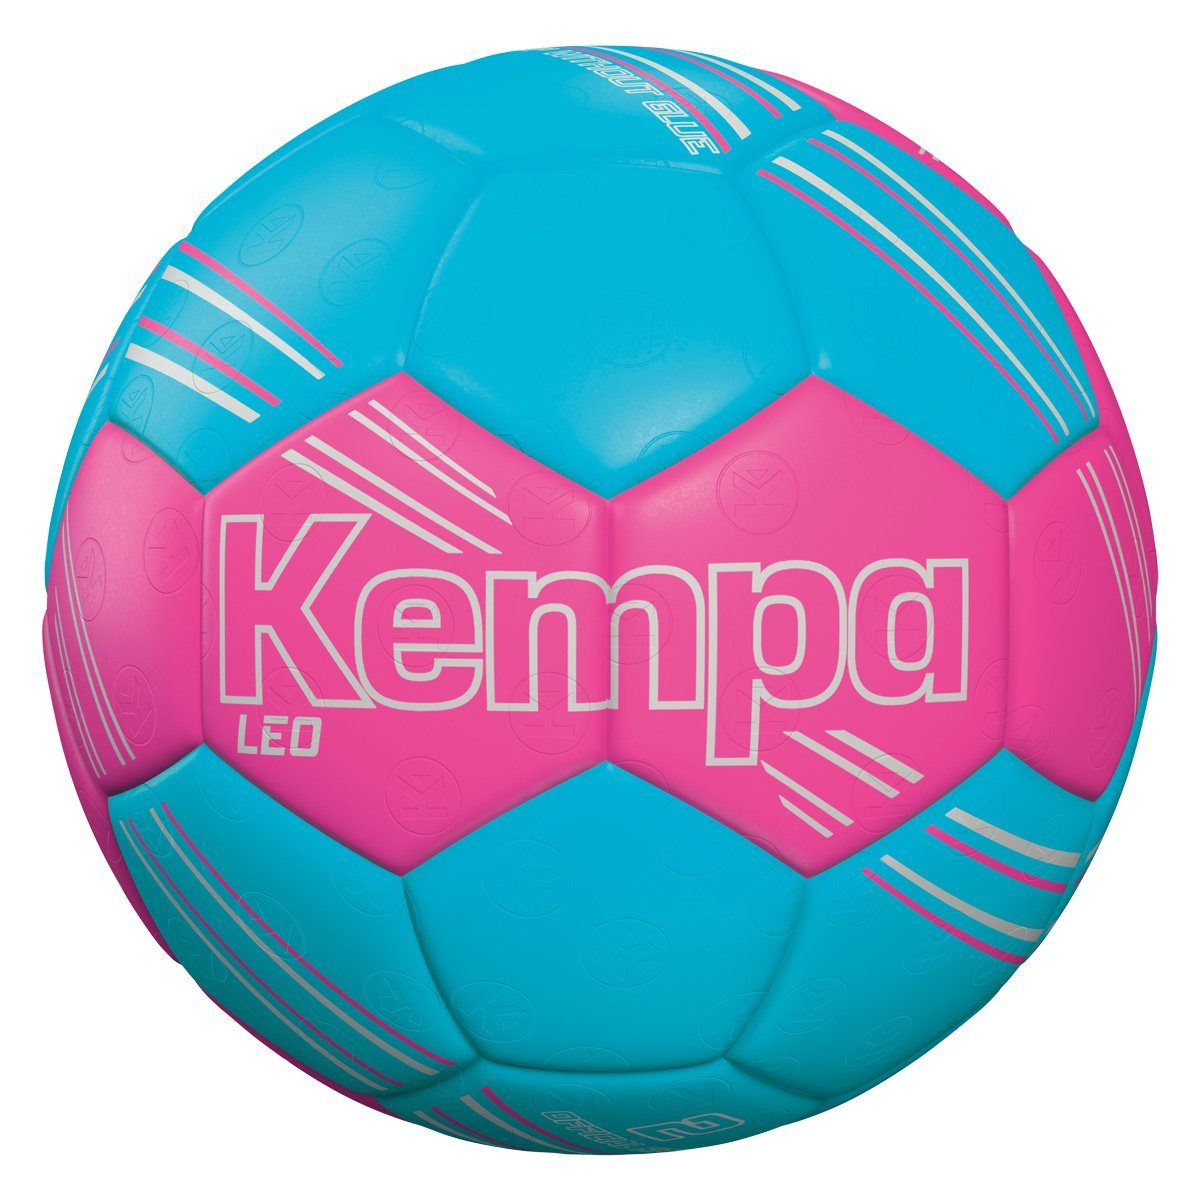 Kempa Handball Kempa pink/aqua Handball LEO